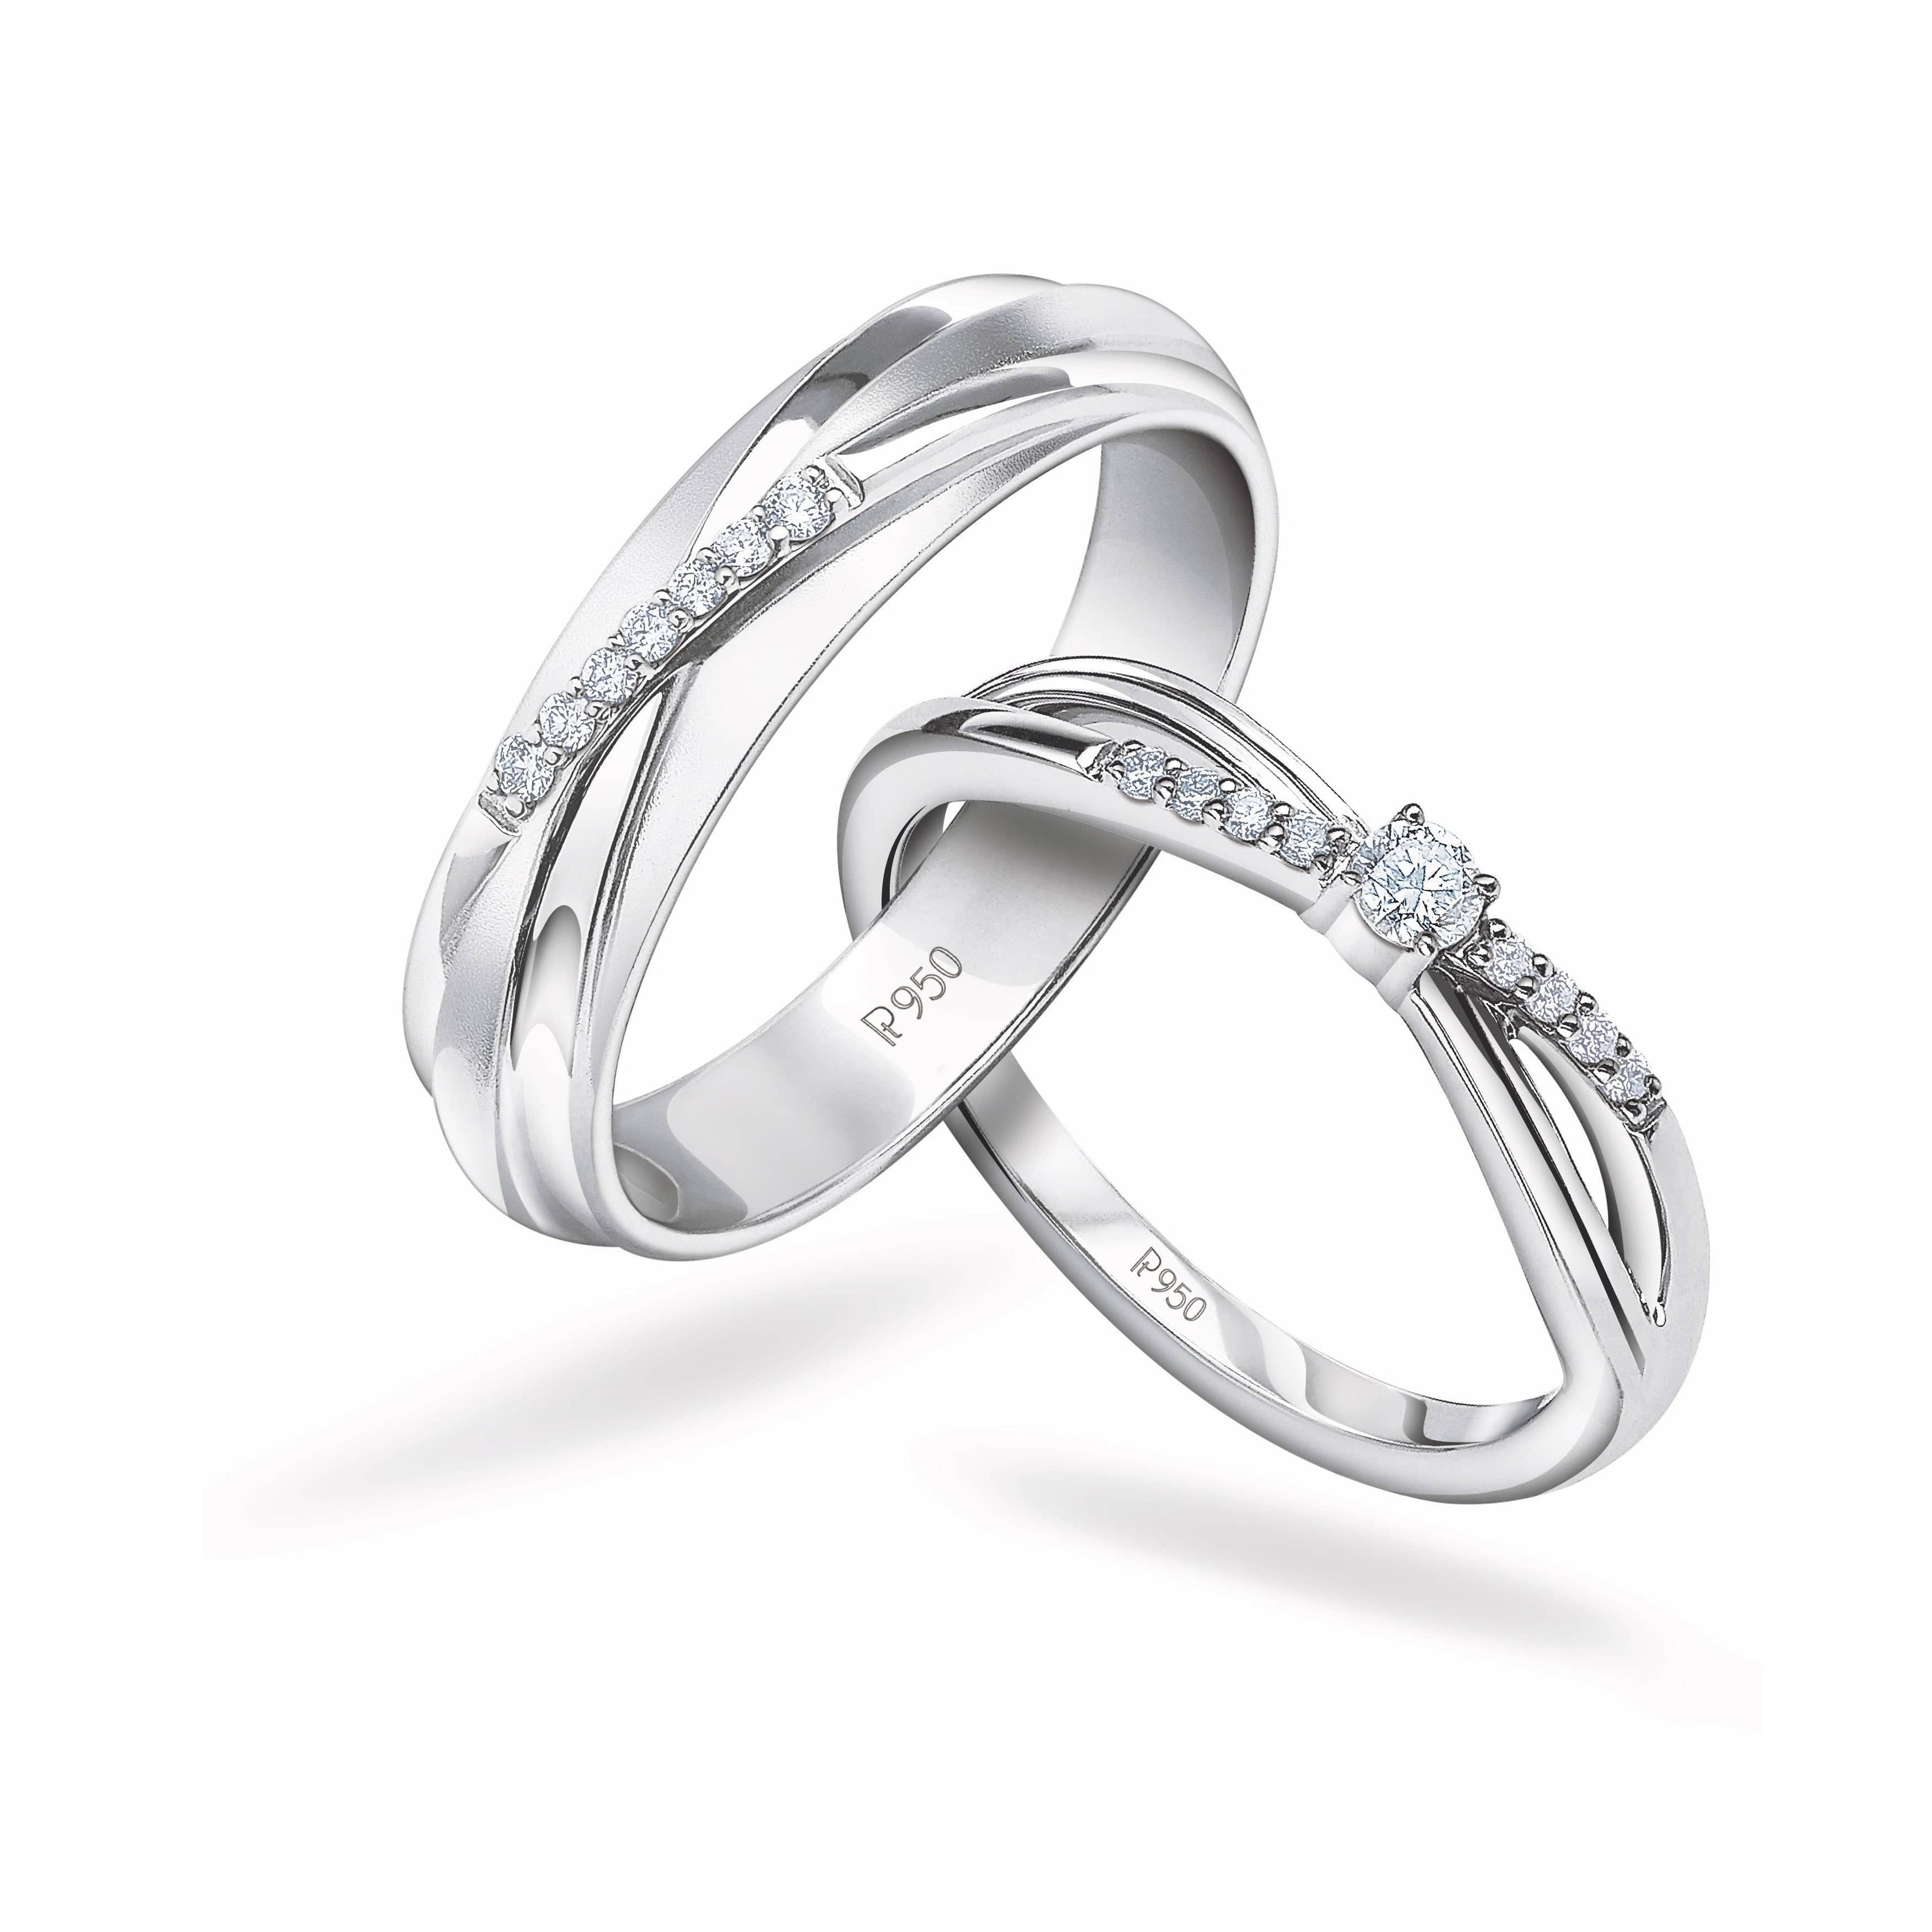 Beautiful Couple Diamond Ring Your Love Stock Photo 1644885775 |  Shutterstock